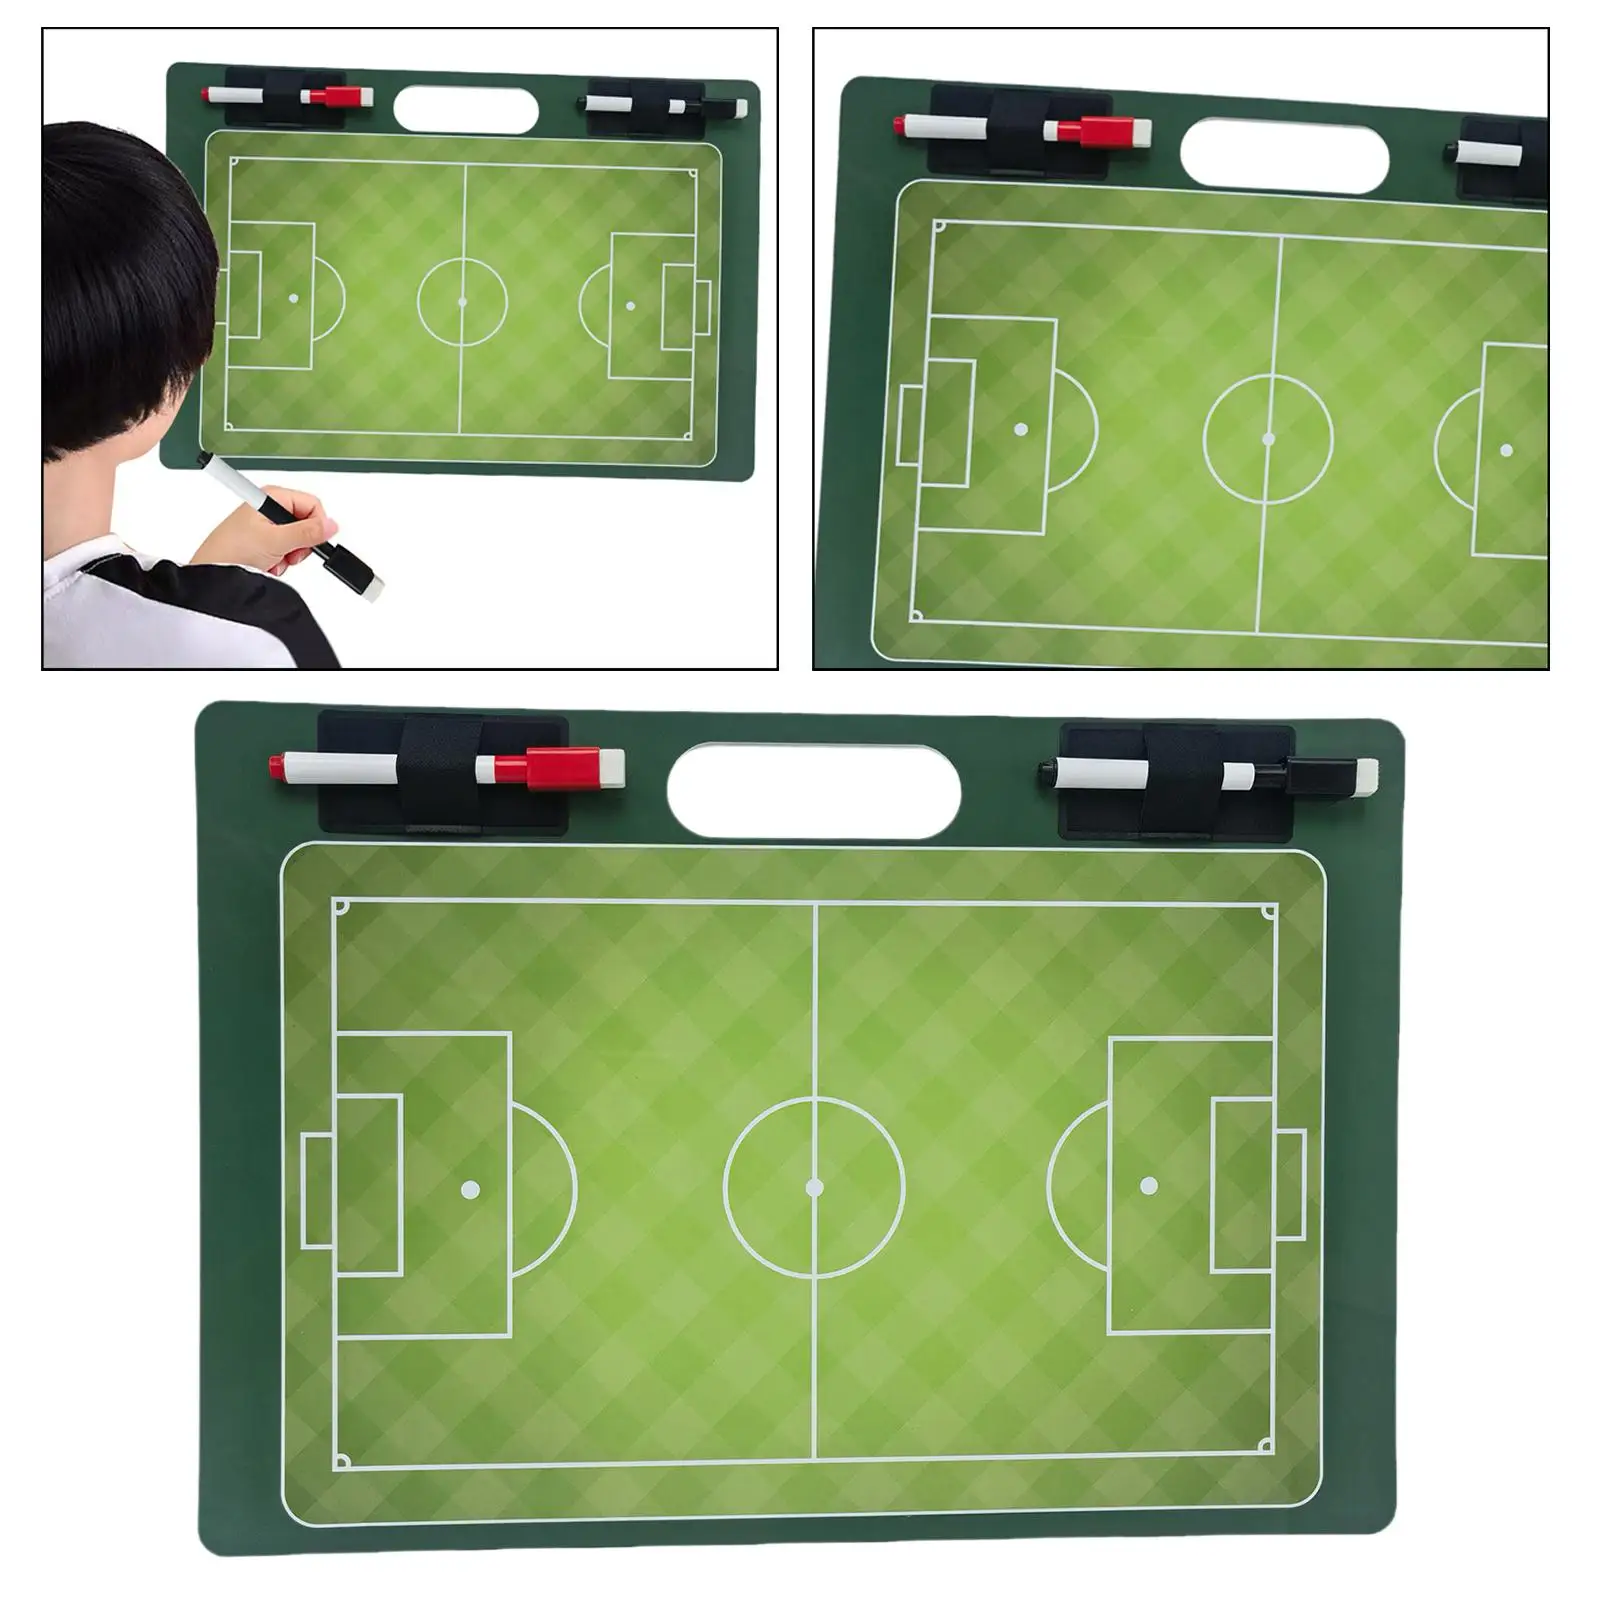 

Marker Board Training Equipment Portable Marker Pen Football Coaching Board Coaches Clipboard Soccer for Teaching Strategy Plan